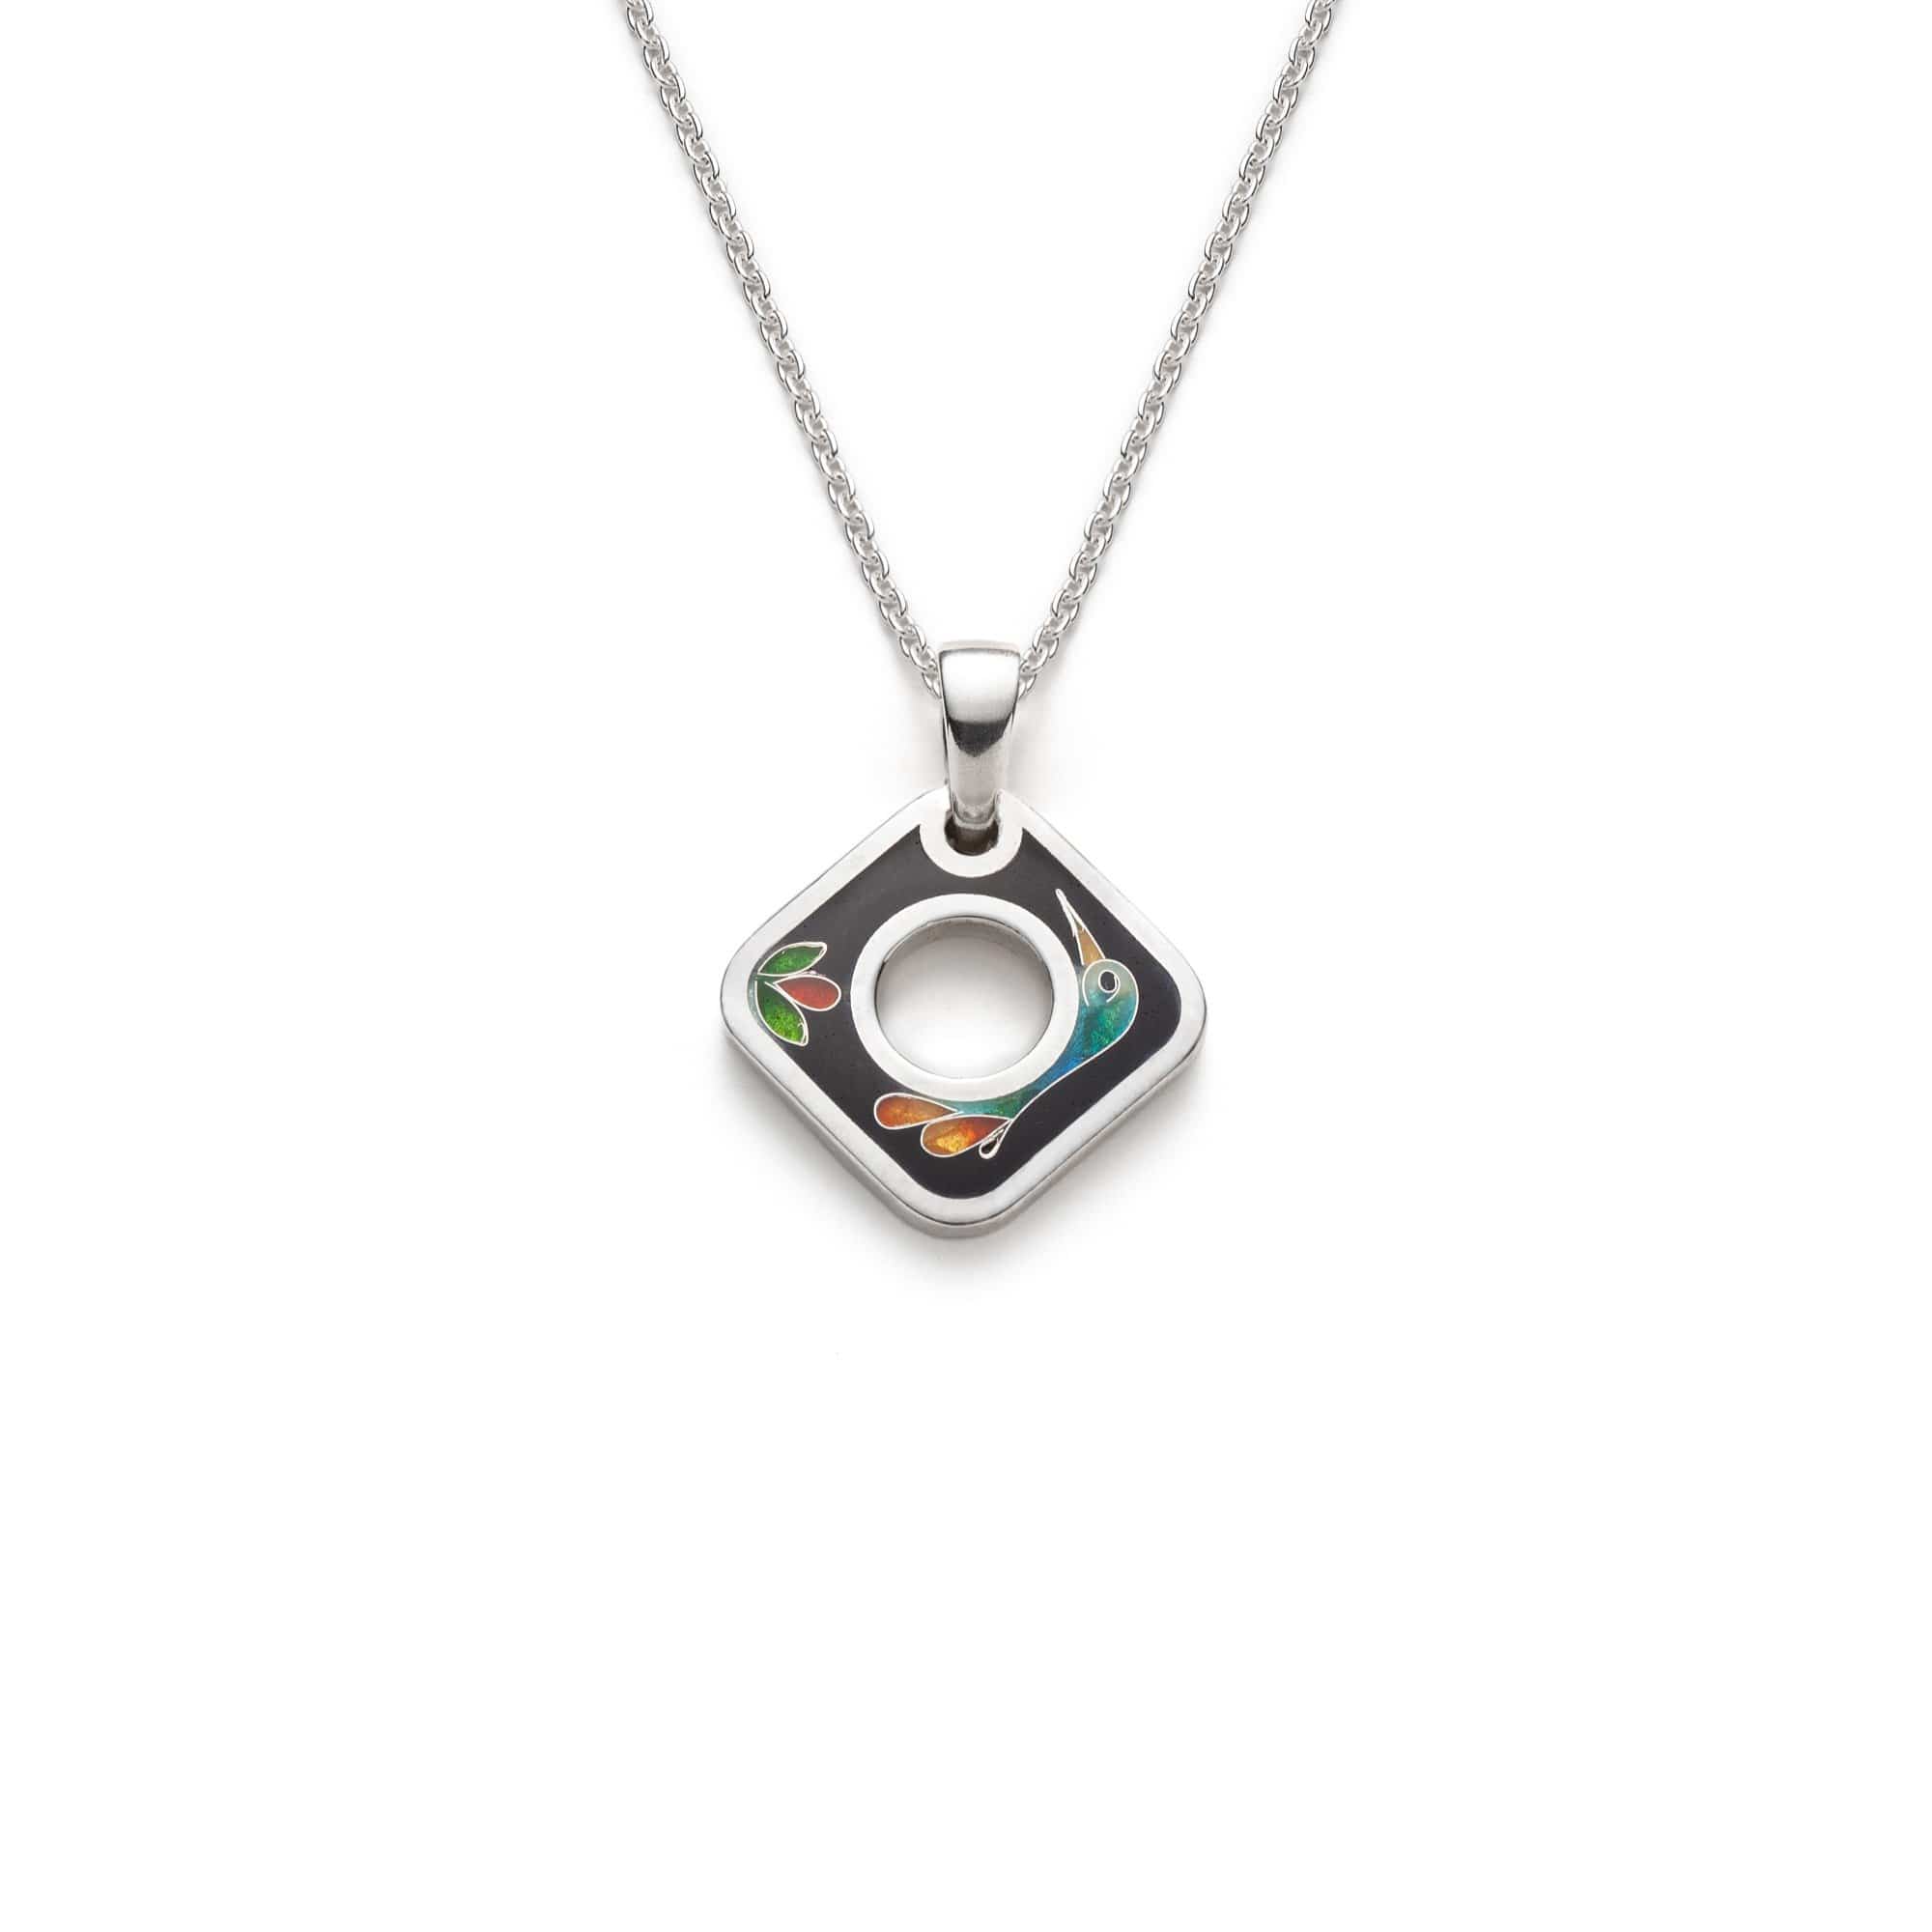 Camera Shape Pendant Personalized Photo Custom Projection Necklace Gifts GX  | eBay